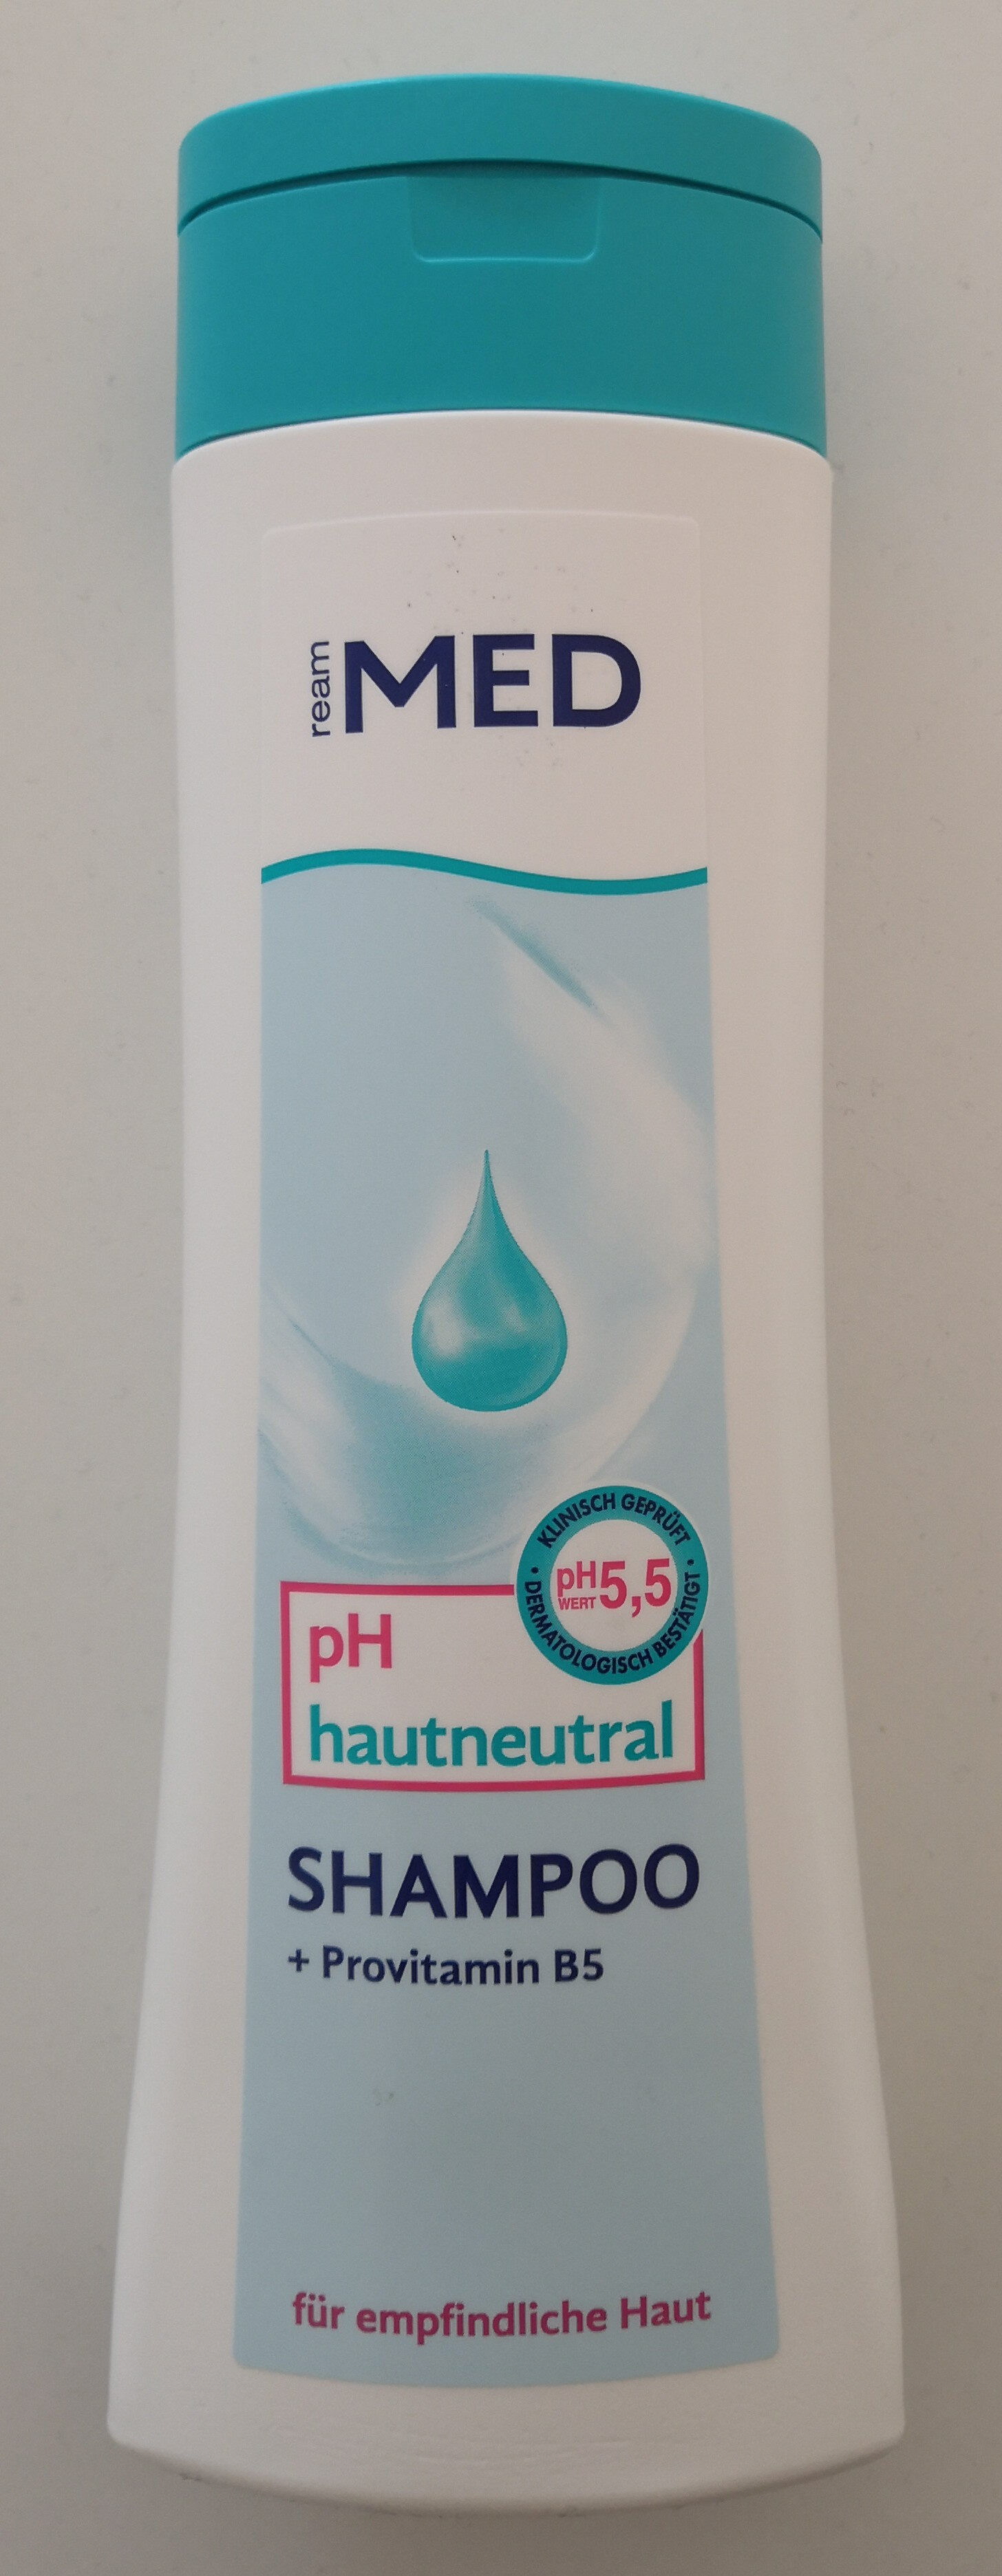 ream MED Shampoo pH hautneutral + Provitamin B5 - Product - de